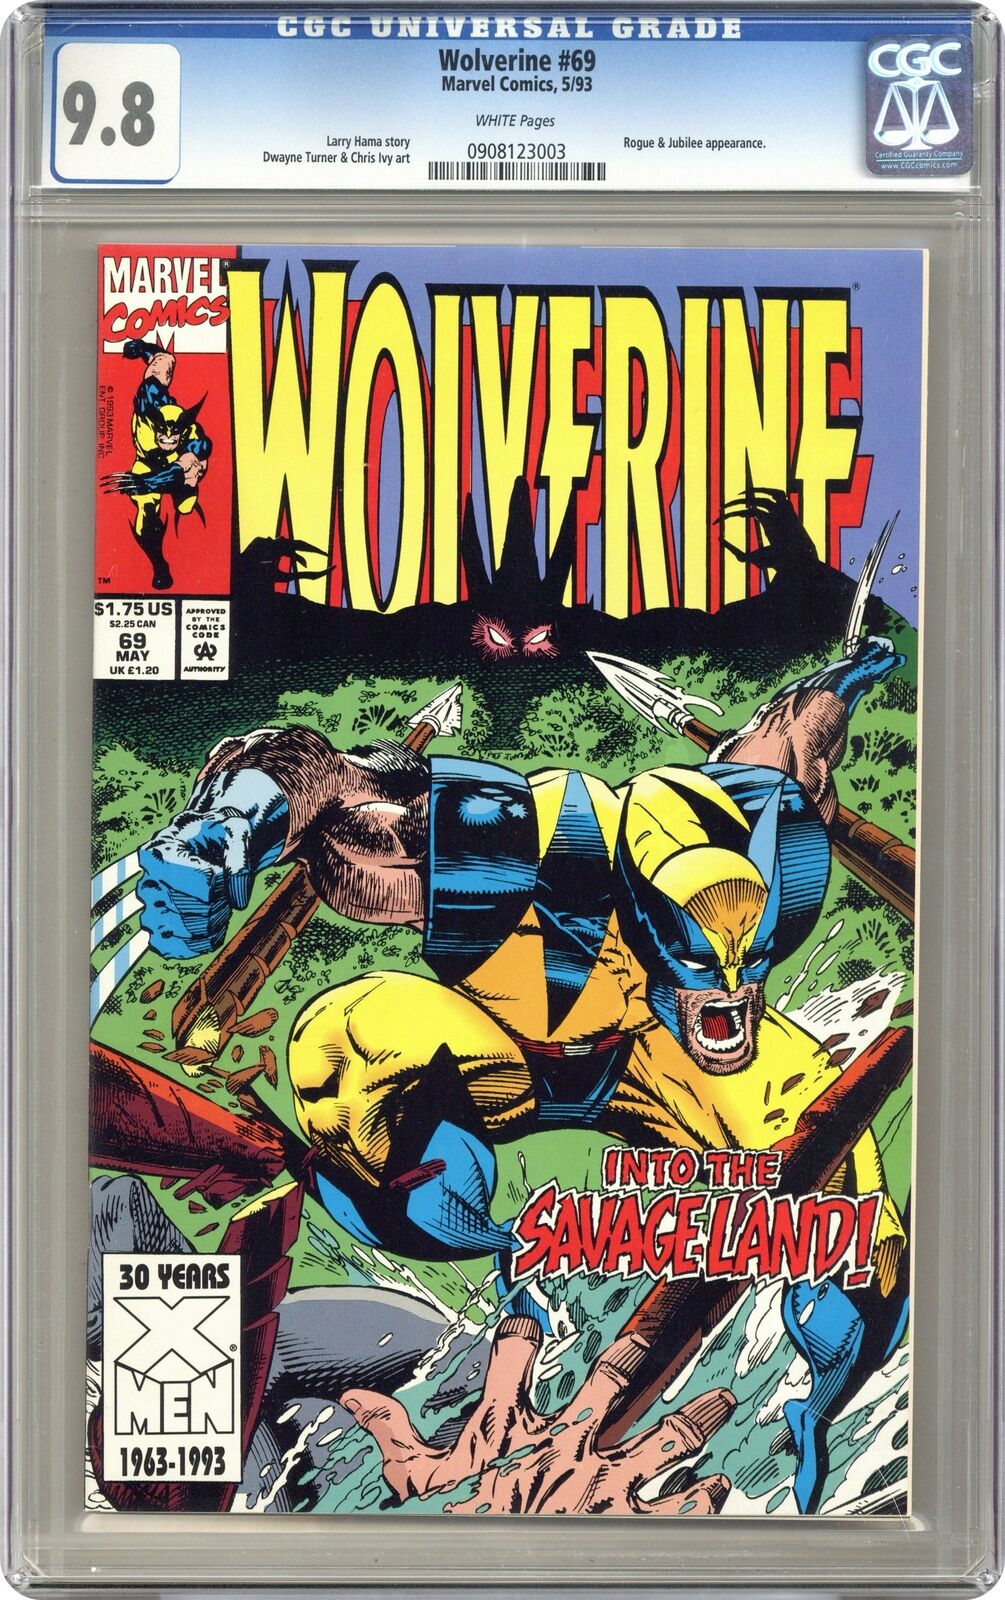 Wolverine #69 CGC 9.8 1993 0908123003